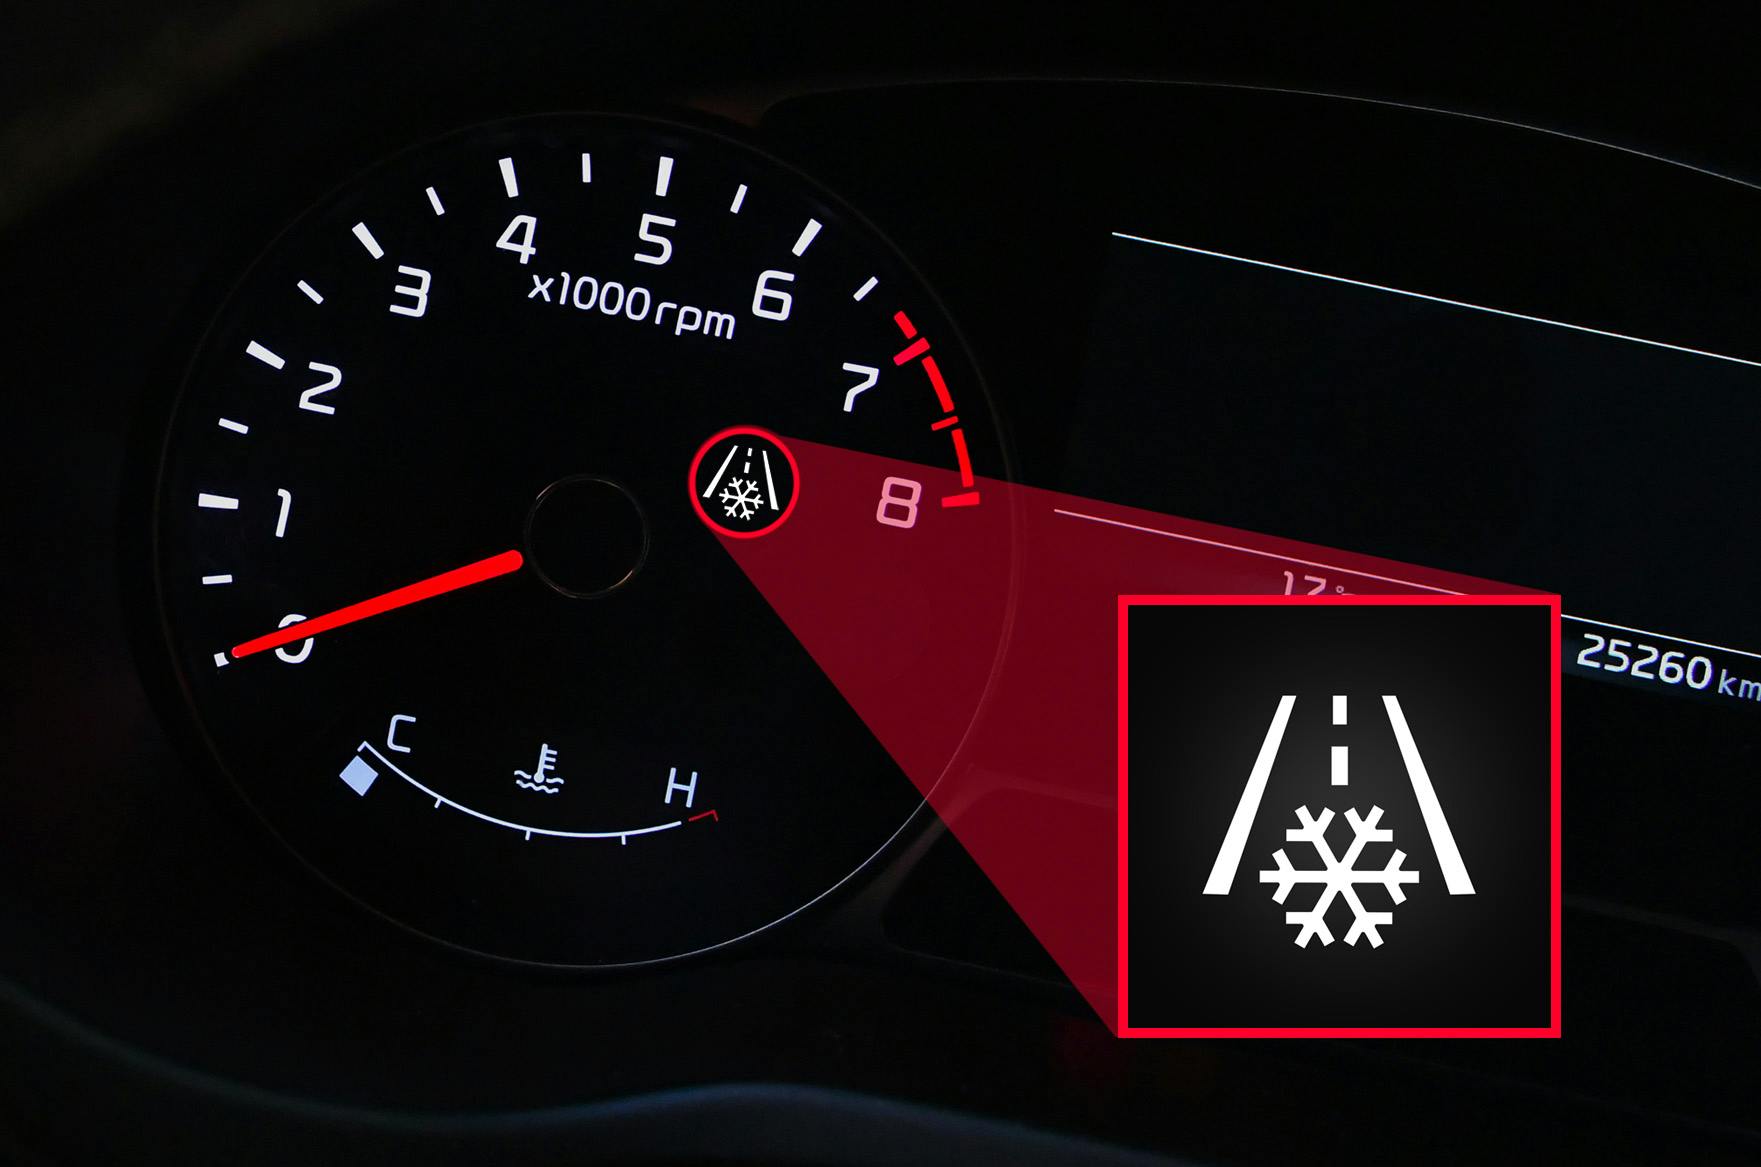 Dónde colocar el sensor de temperatura exterior del coche?